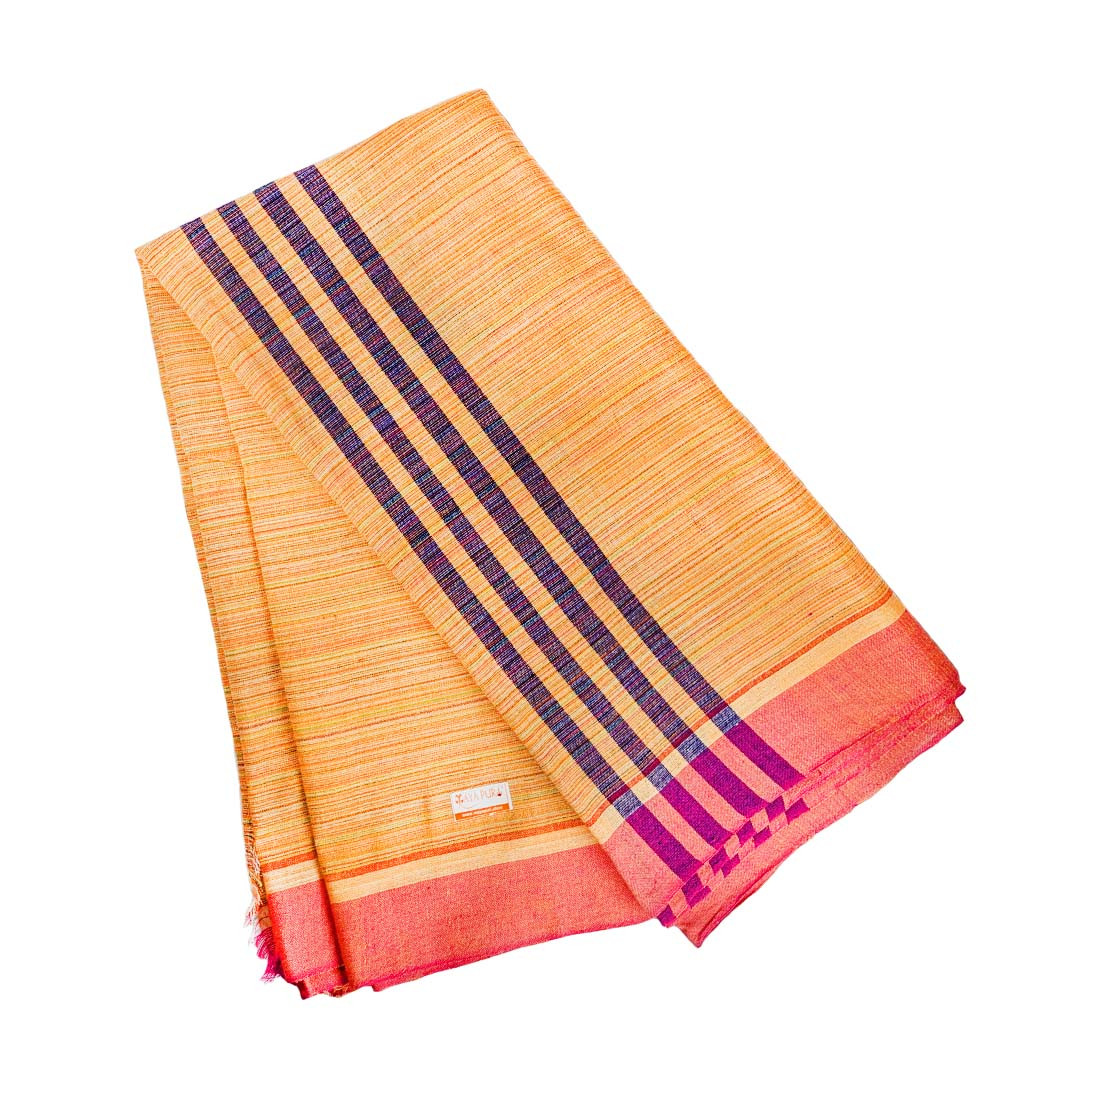 MAYAPURI Pure Cotton Traditional Khadi Handloom Gamcha/Gamchha/Gamucha/Gamusa/Towel/Bath Towels